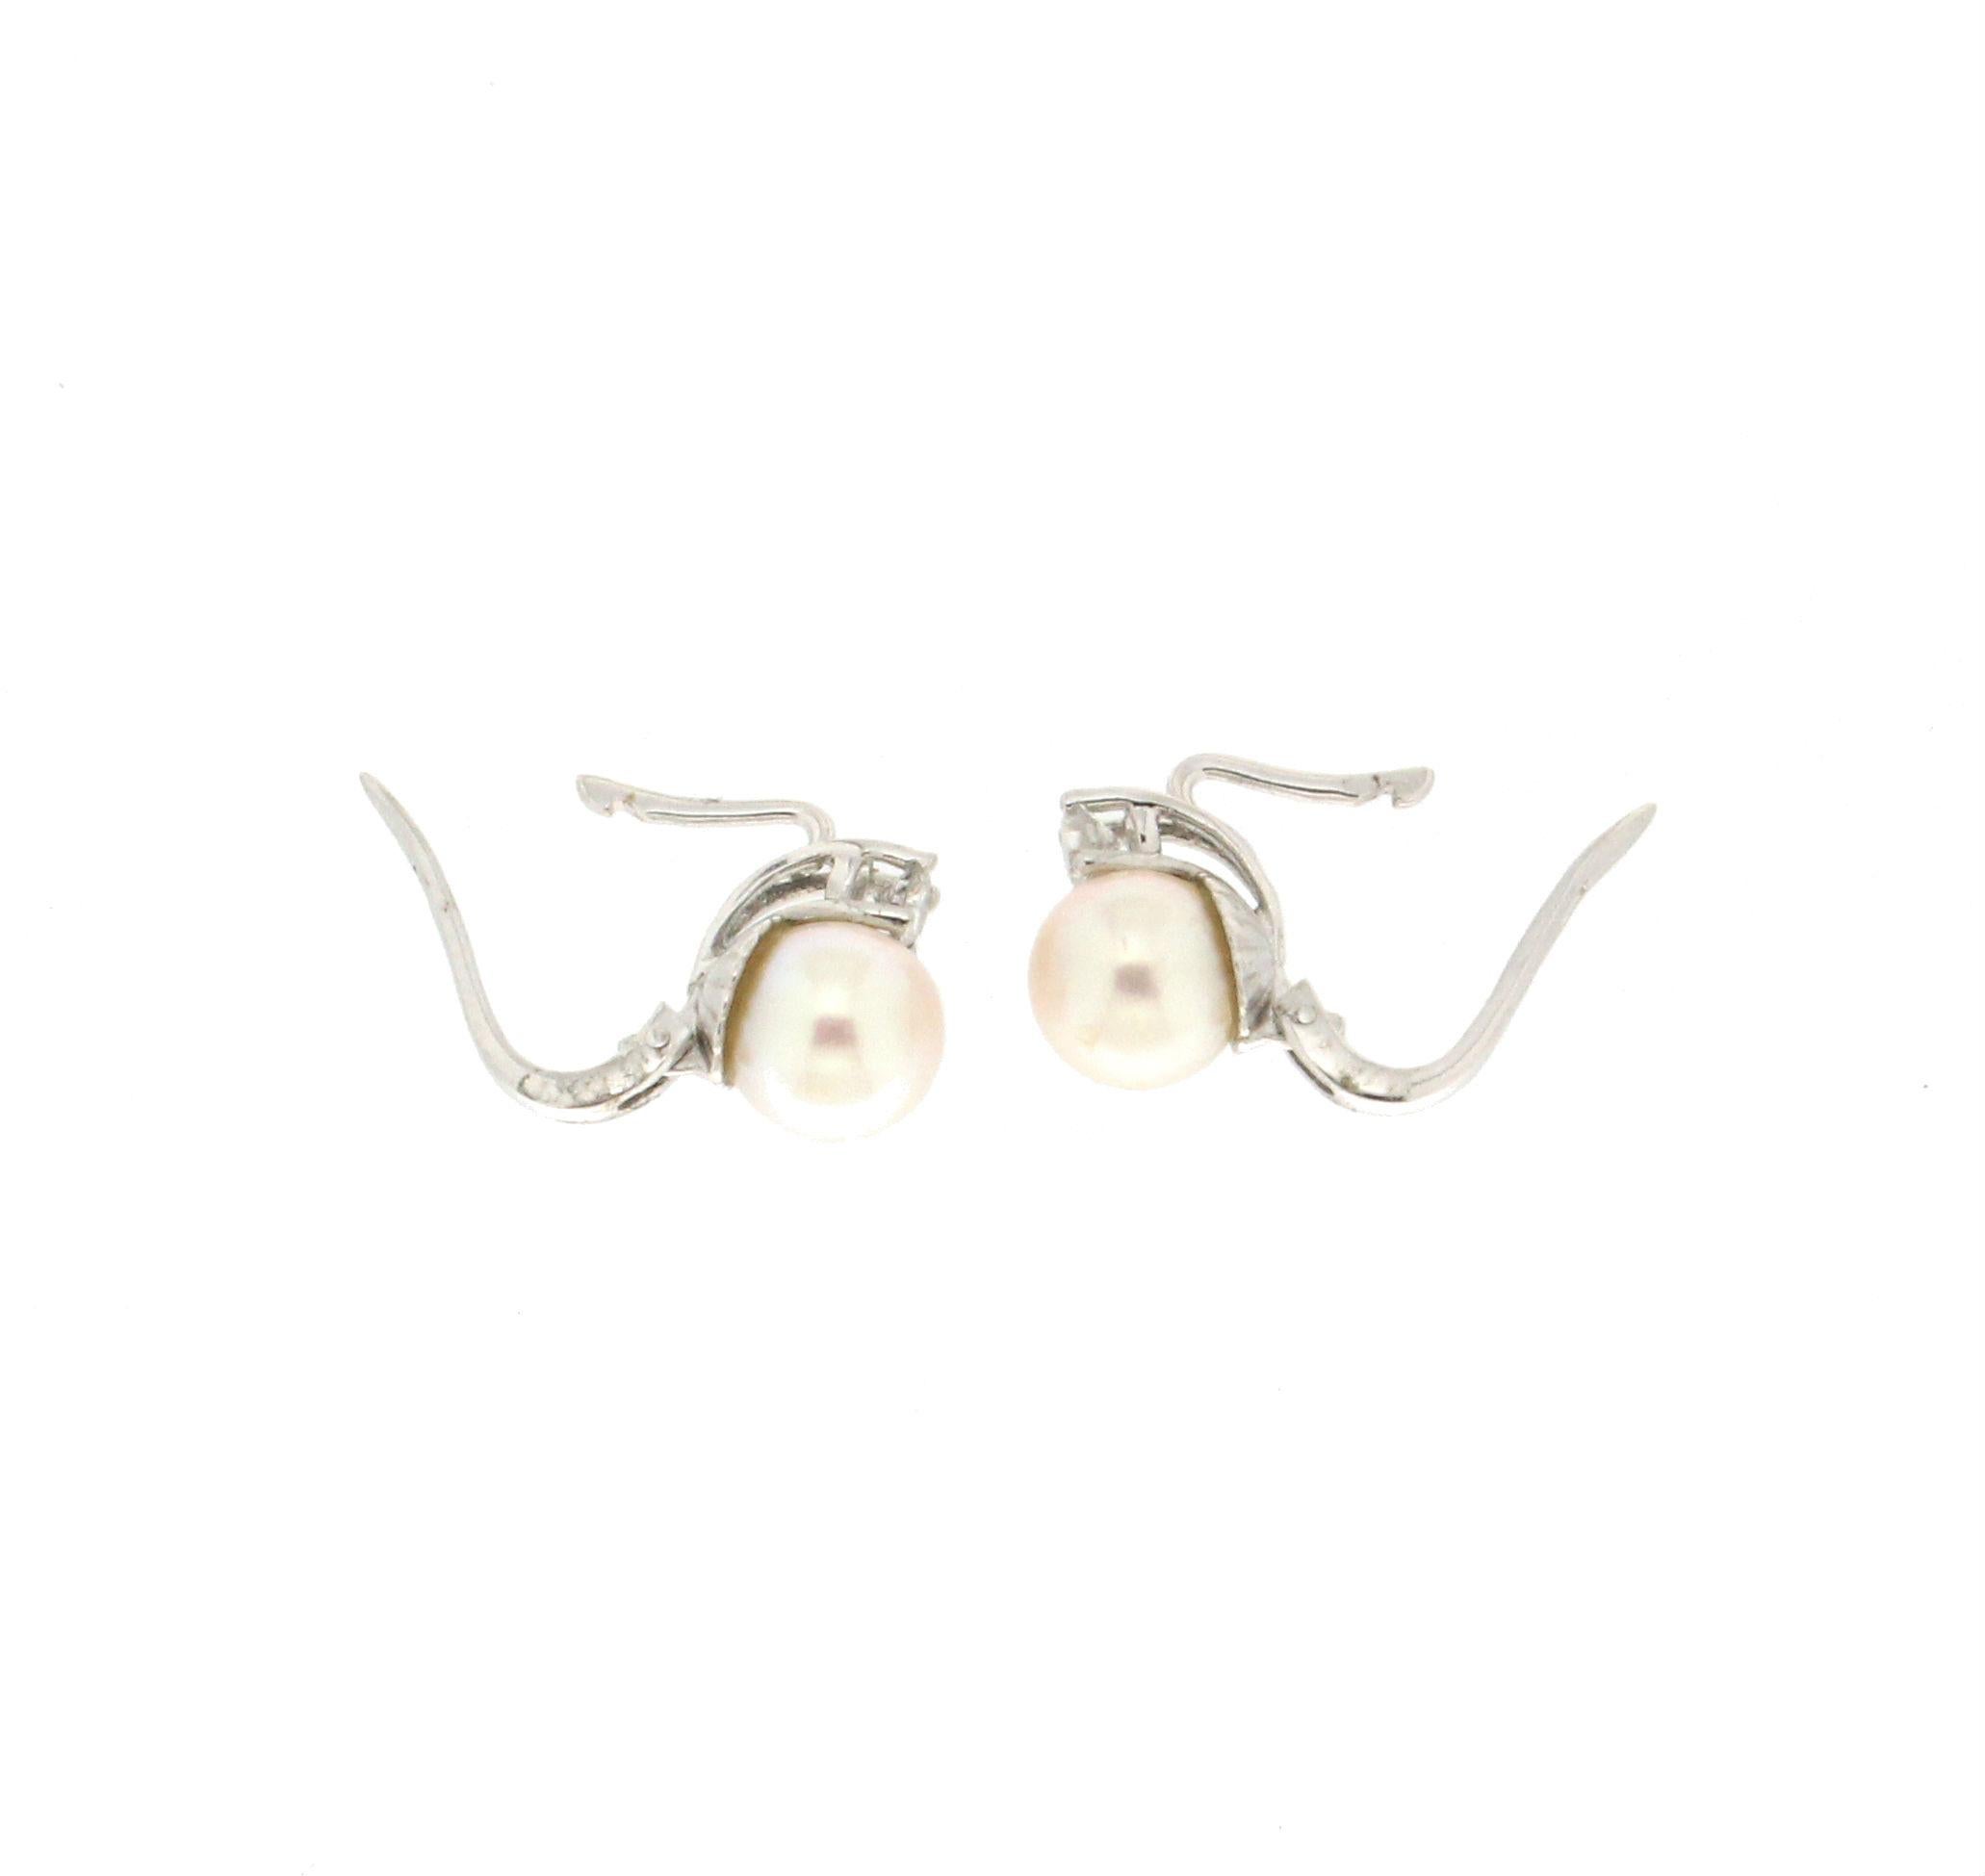 Brilliant Cut Handcraft Japan Pearls 18 Karat White Gold Diamonds Stud Earrings